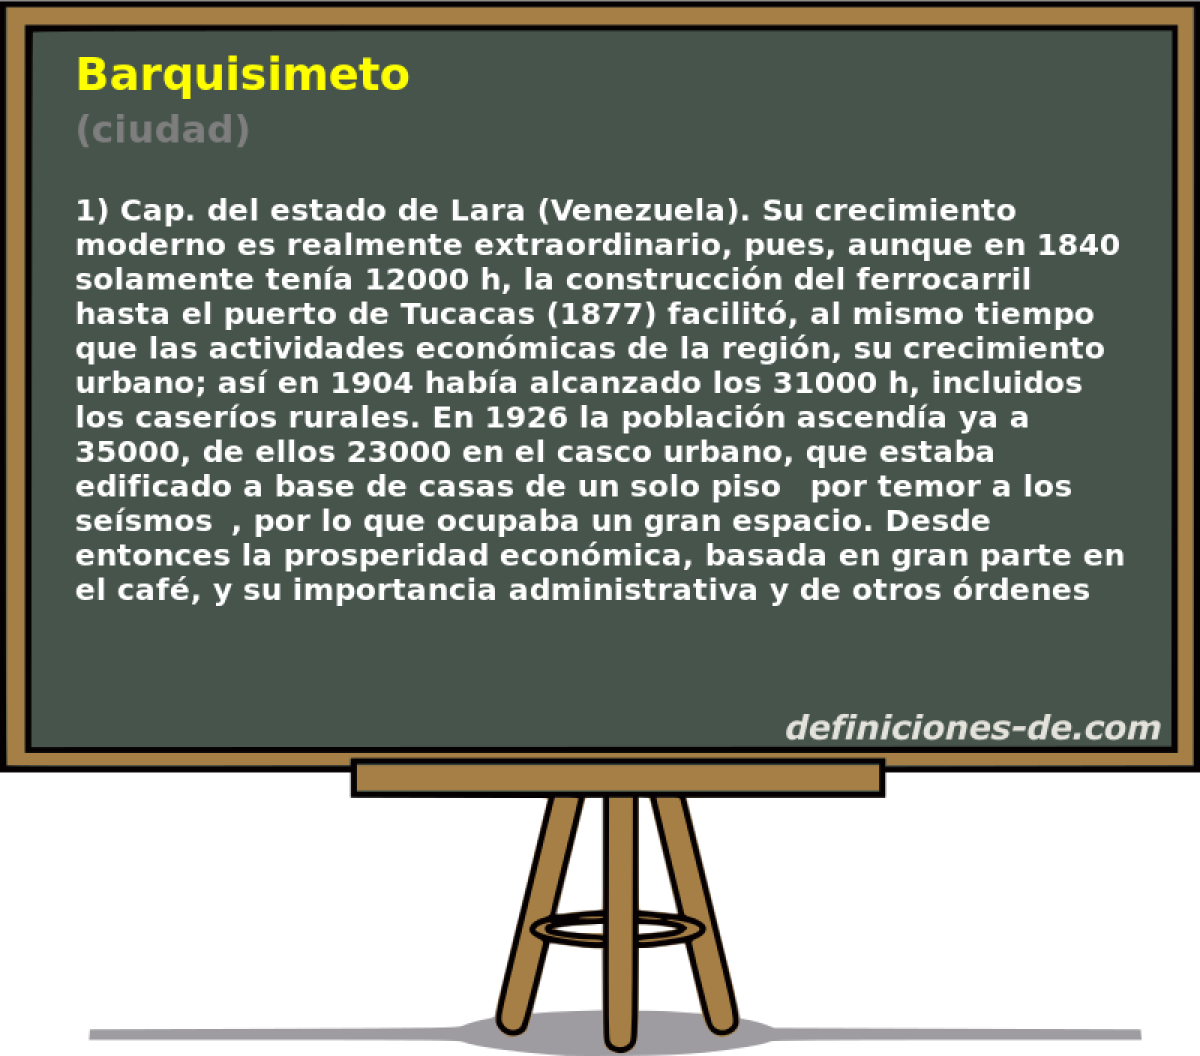 Barquisimeto (ciudad)